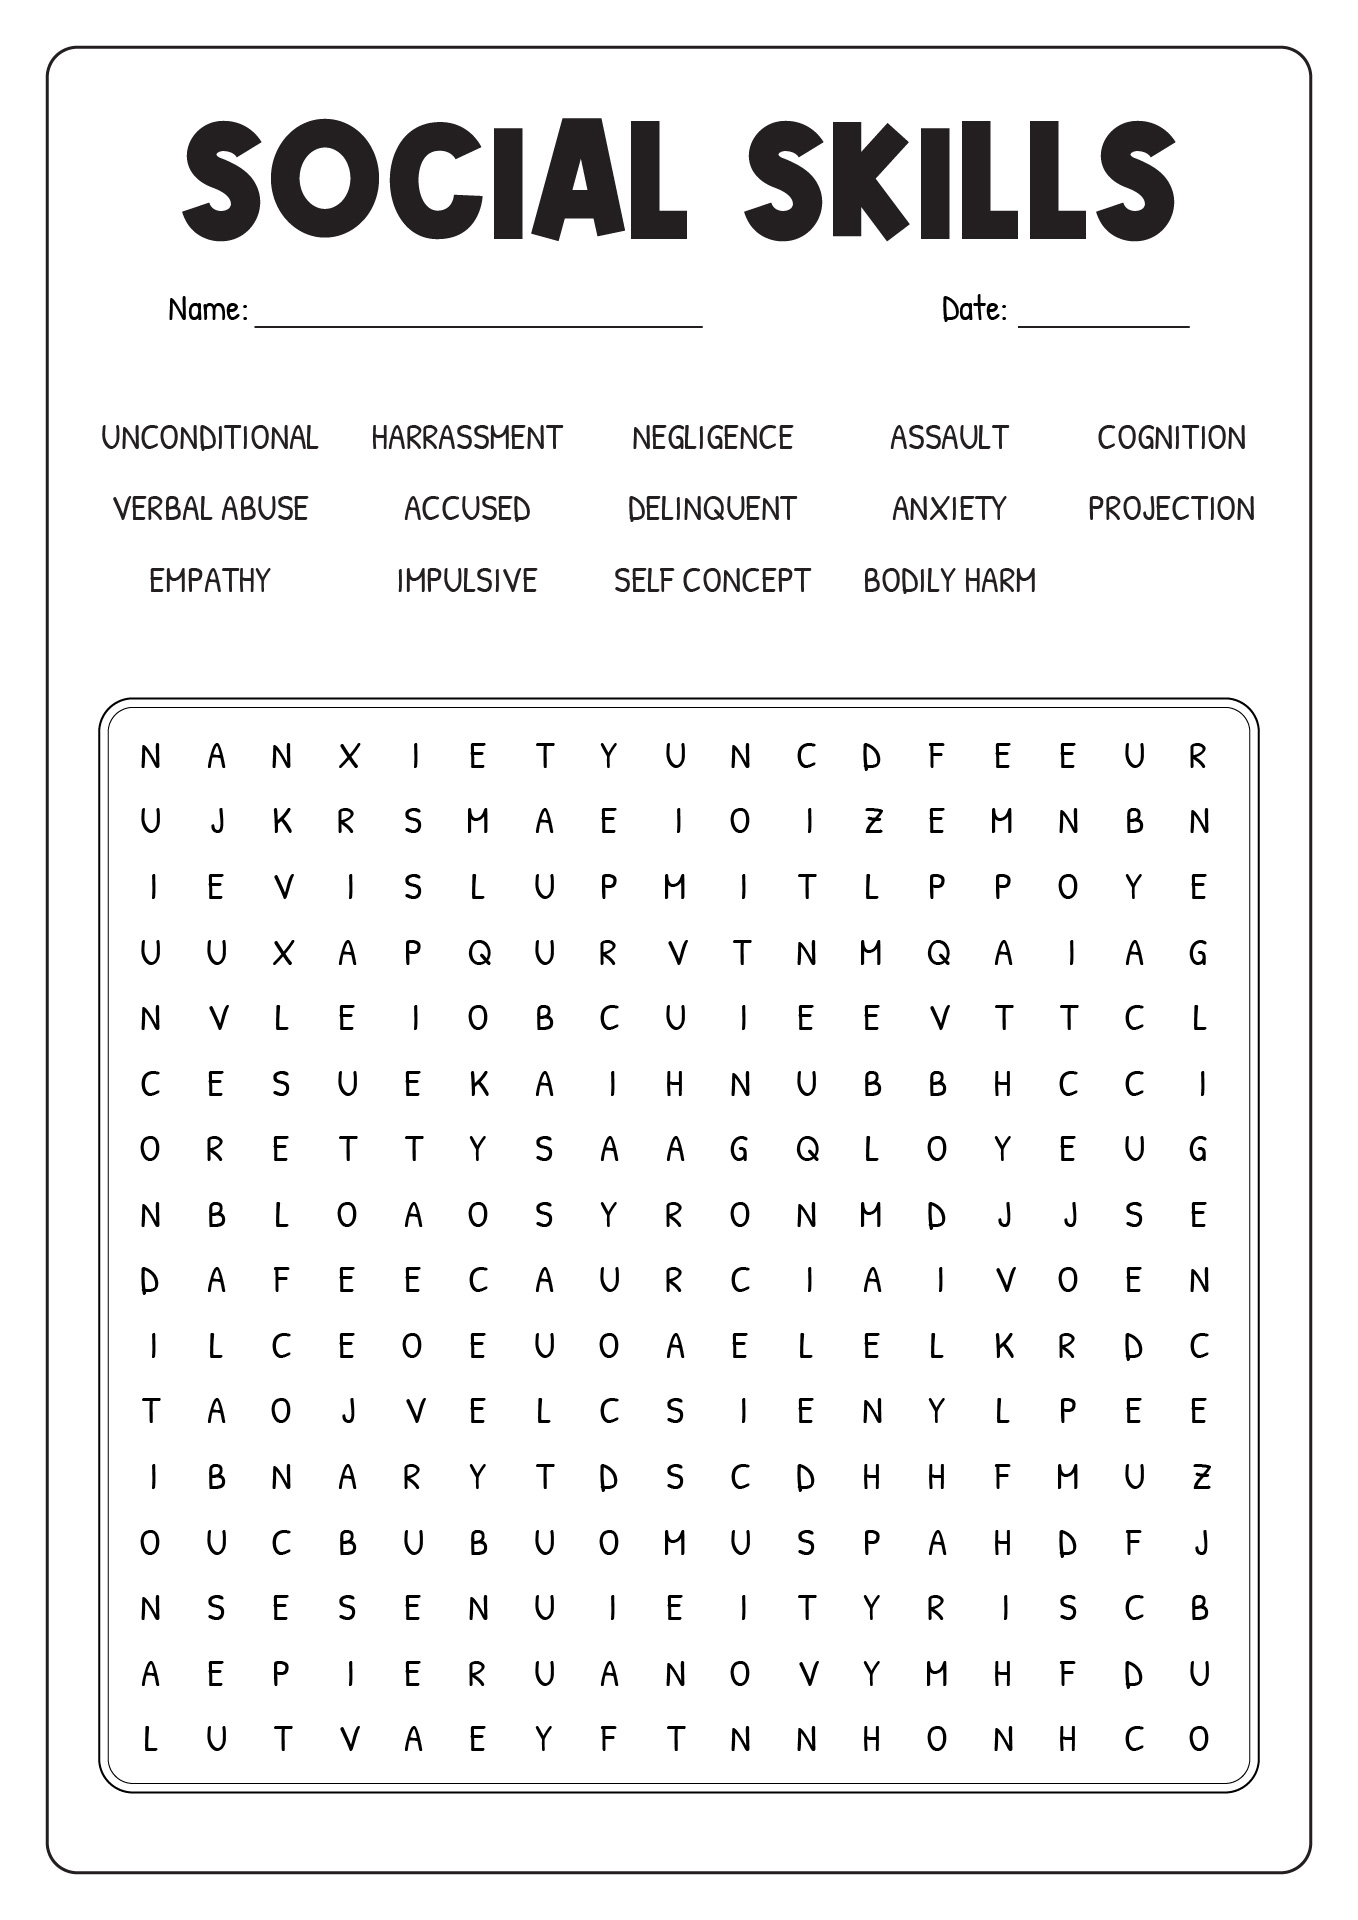 Social Skills Worksheet Words Search Image